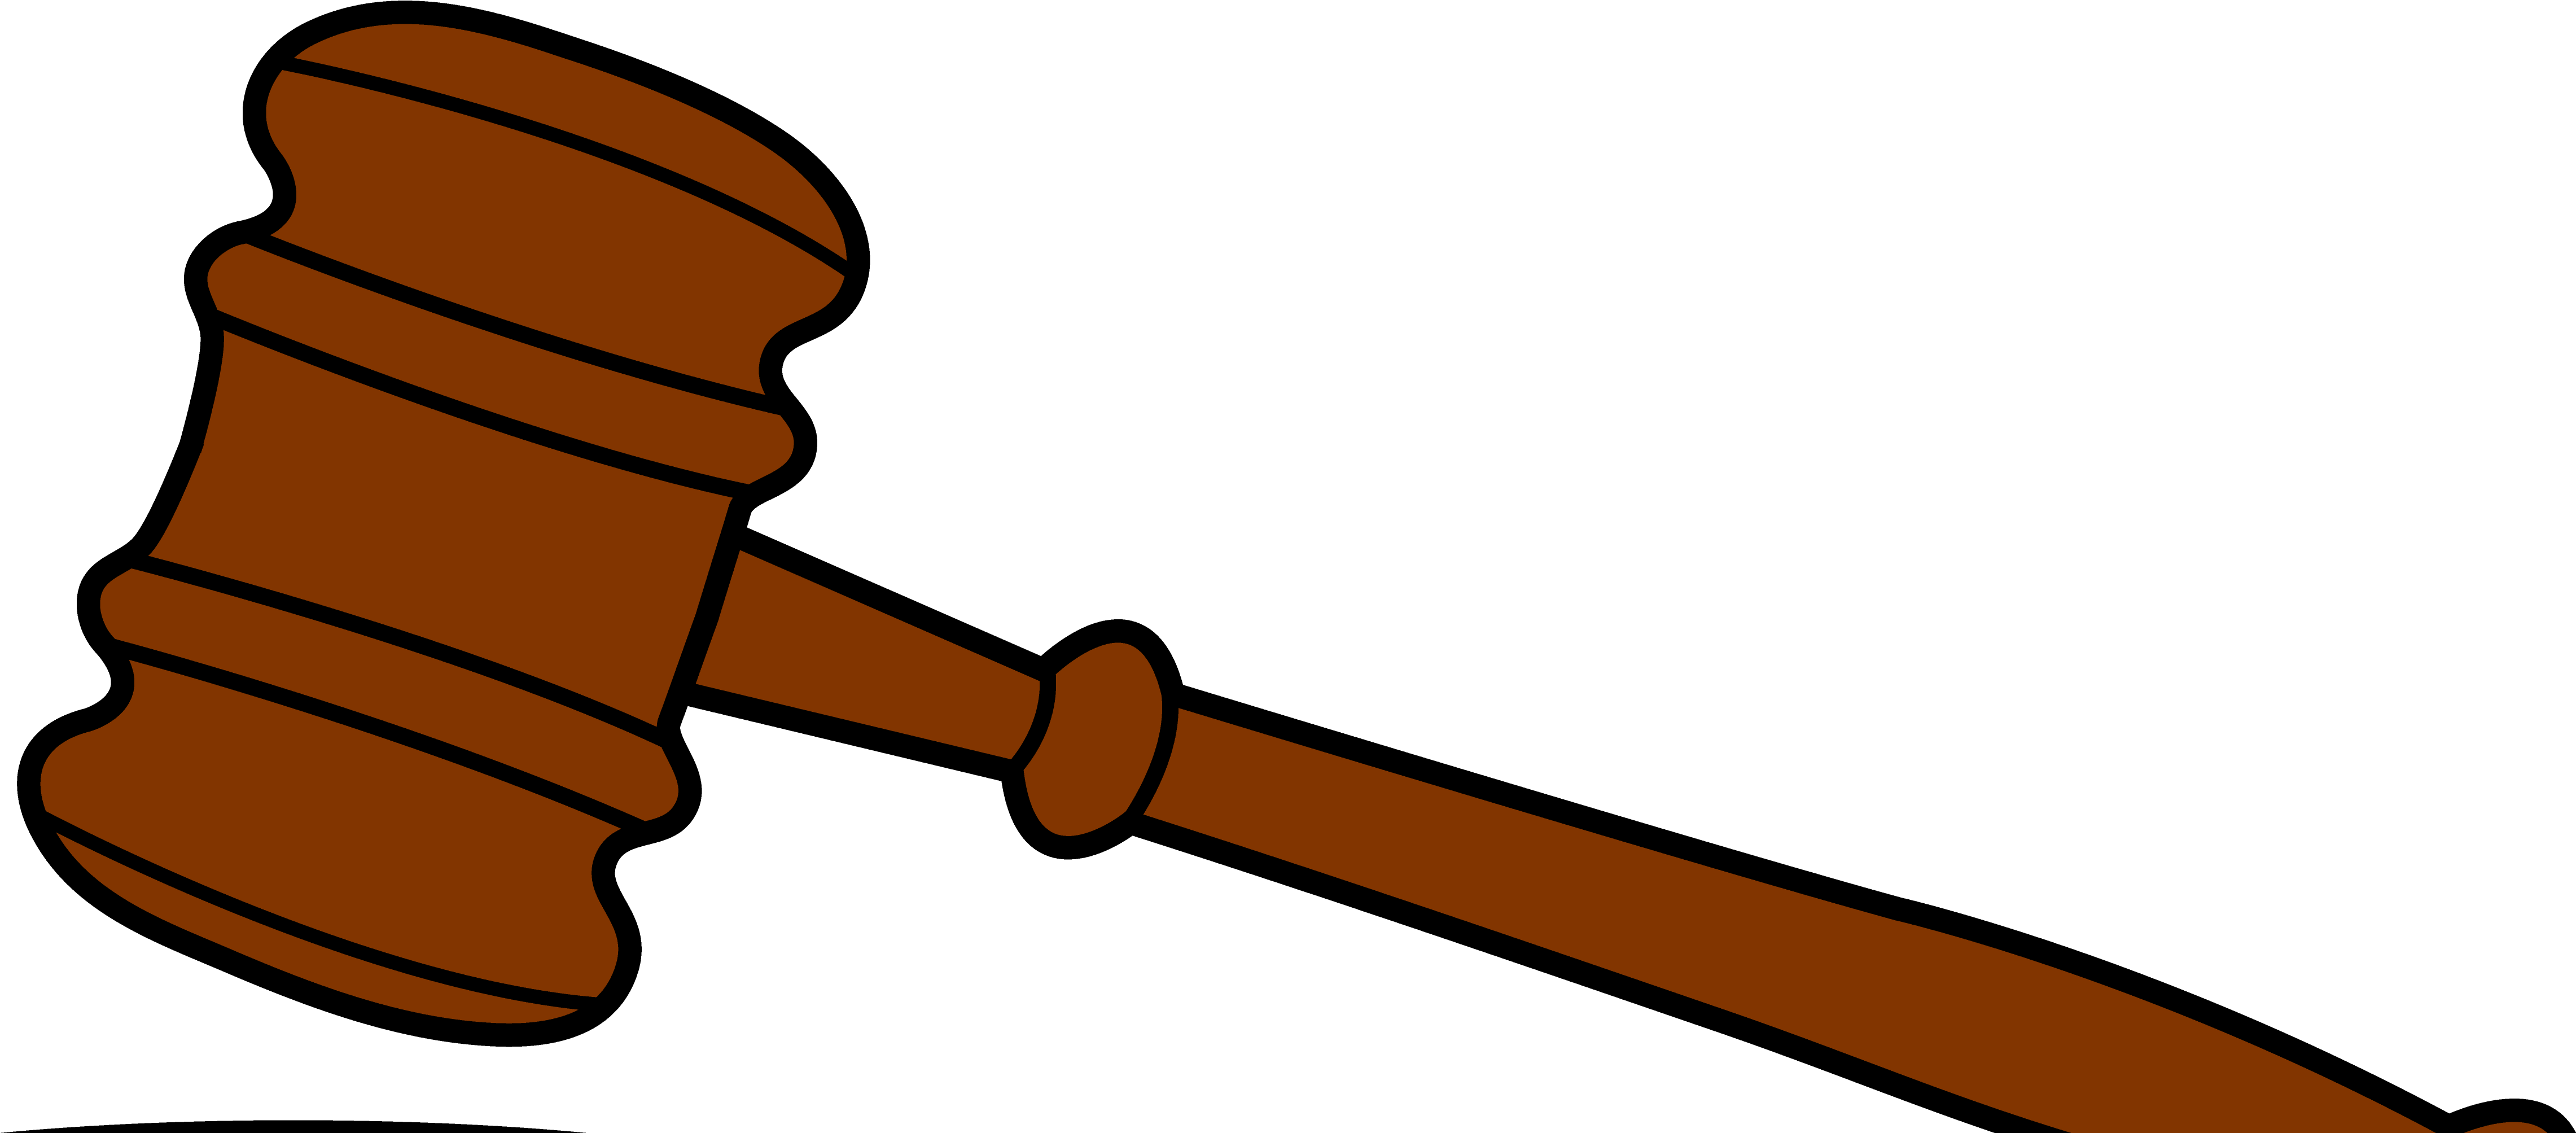 Gavel Clipart Represent The Judicial Branch